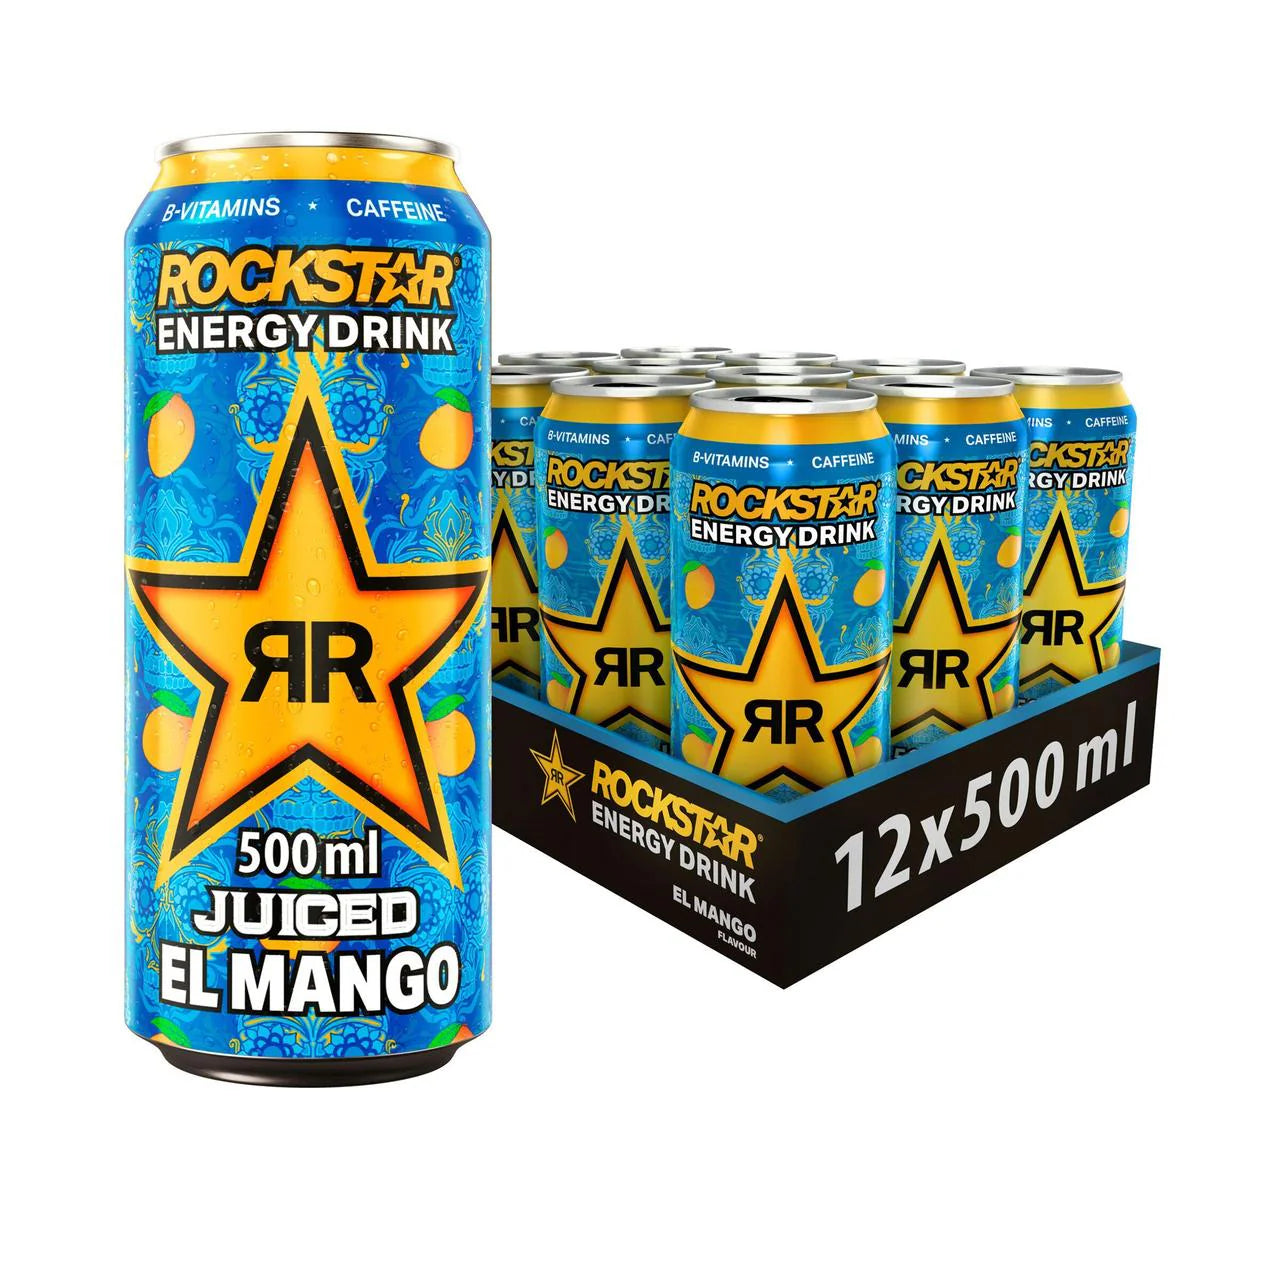 Rockstar Energy Drink Juiced El Mango - 500ml Case of 12